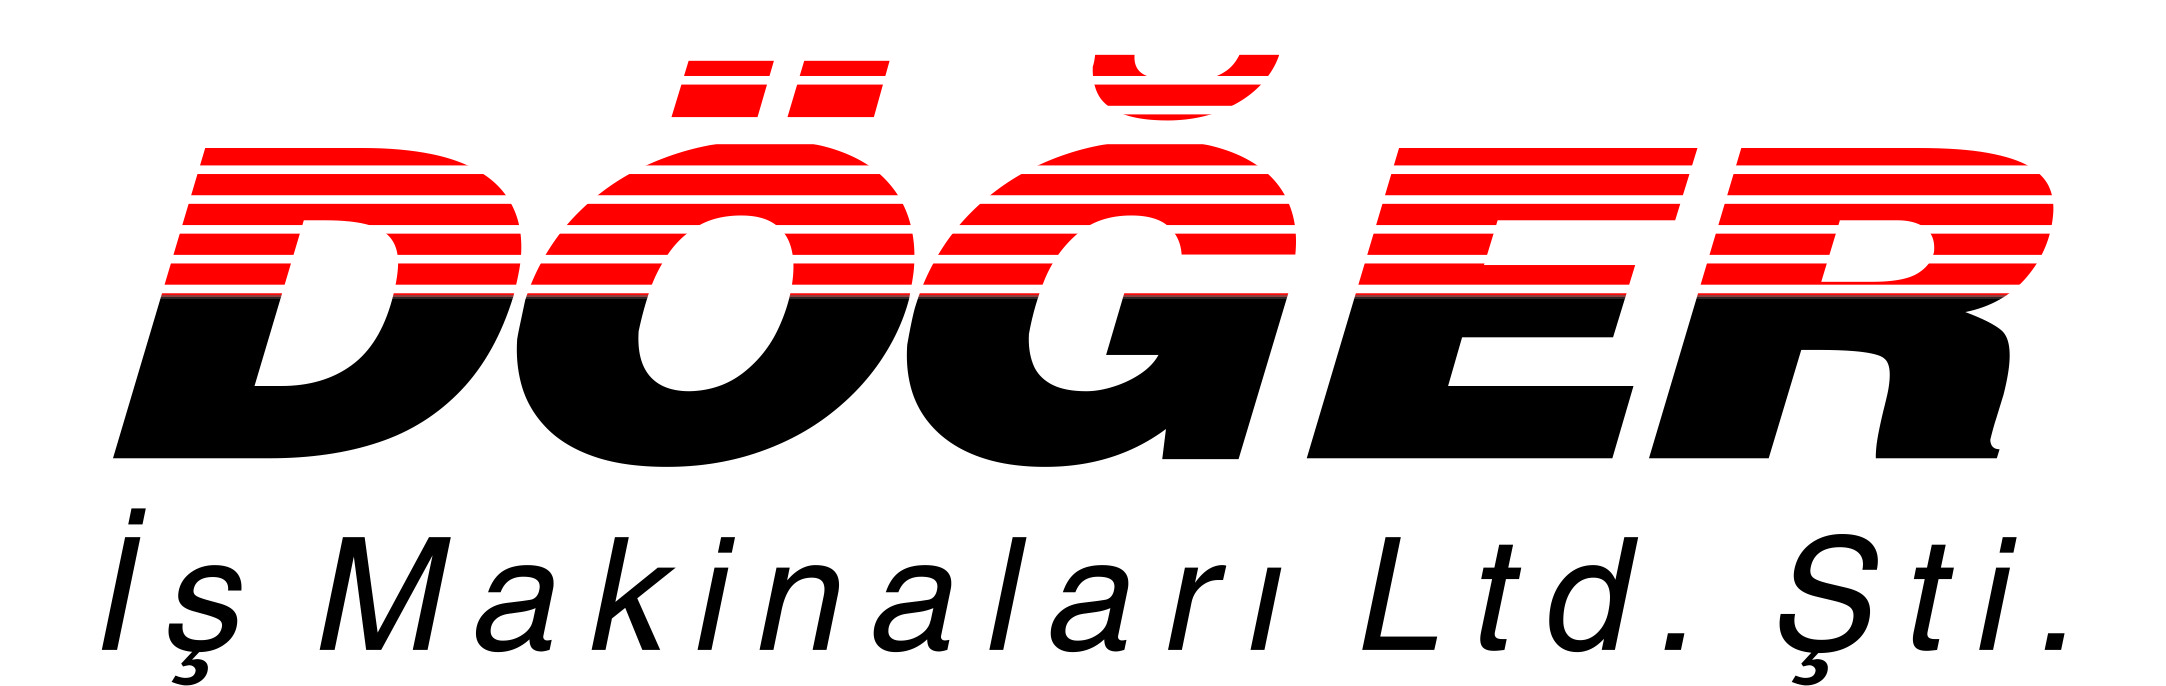 Döger Is Makinaları Ltd.Sti.